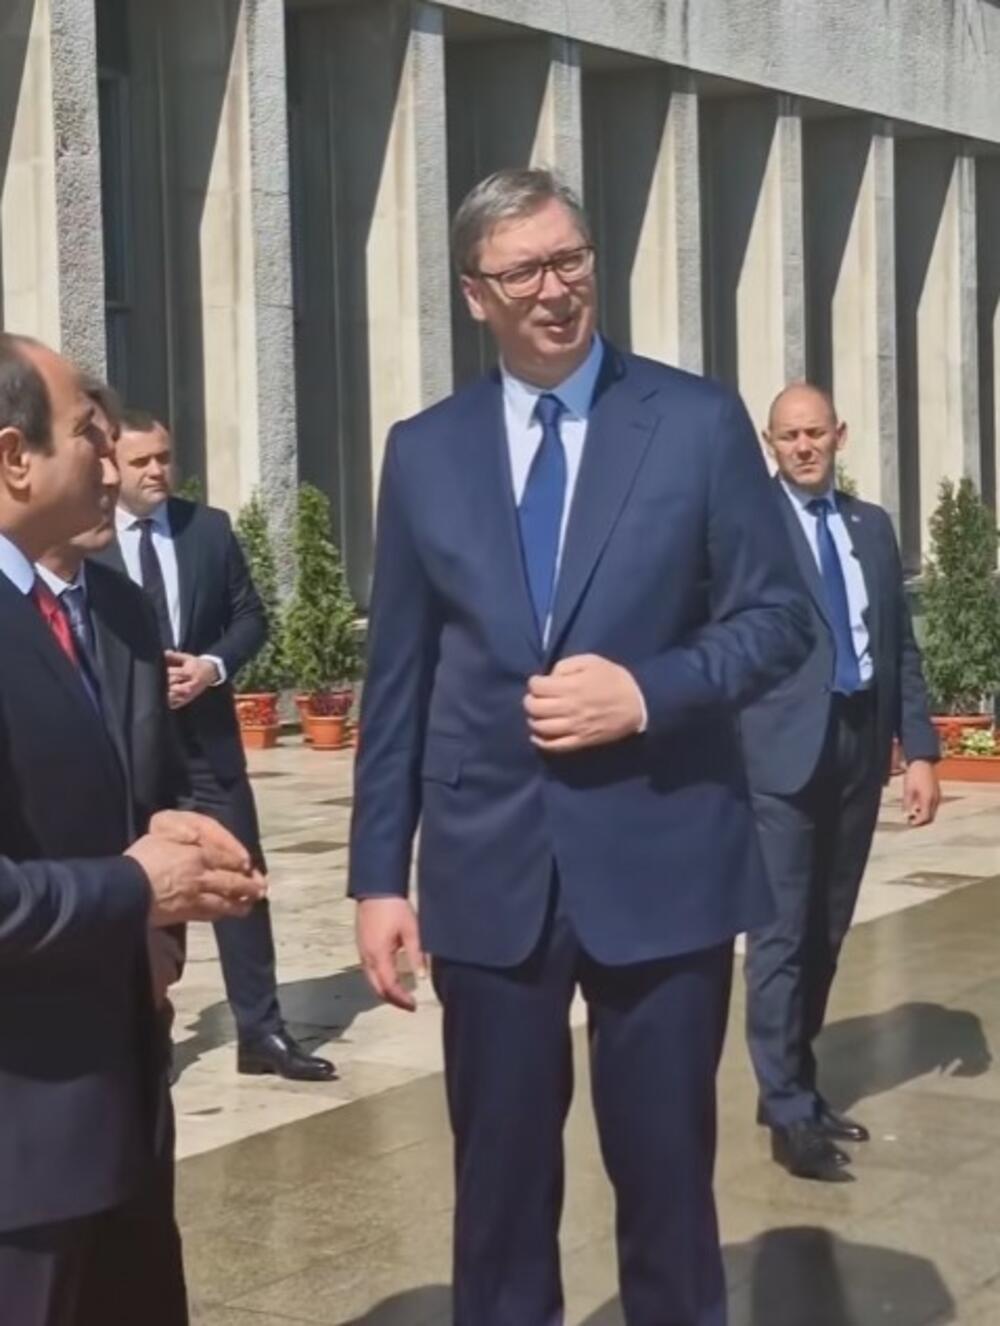 Abdel Fatah al Sisi, Aleksandar Vučić